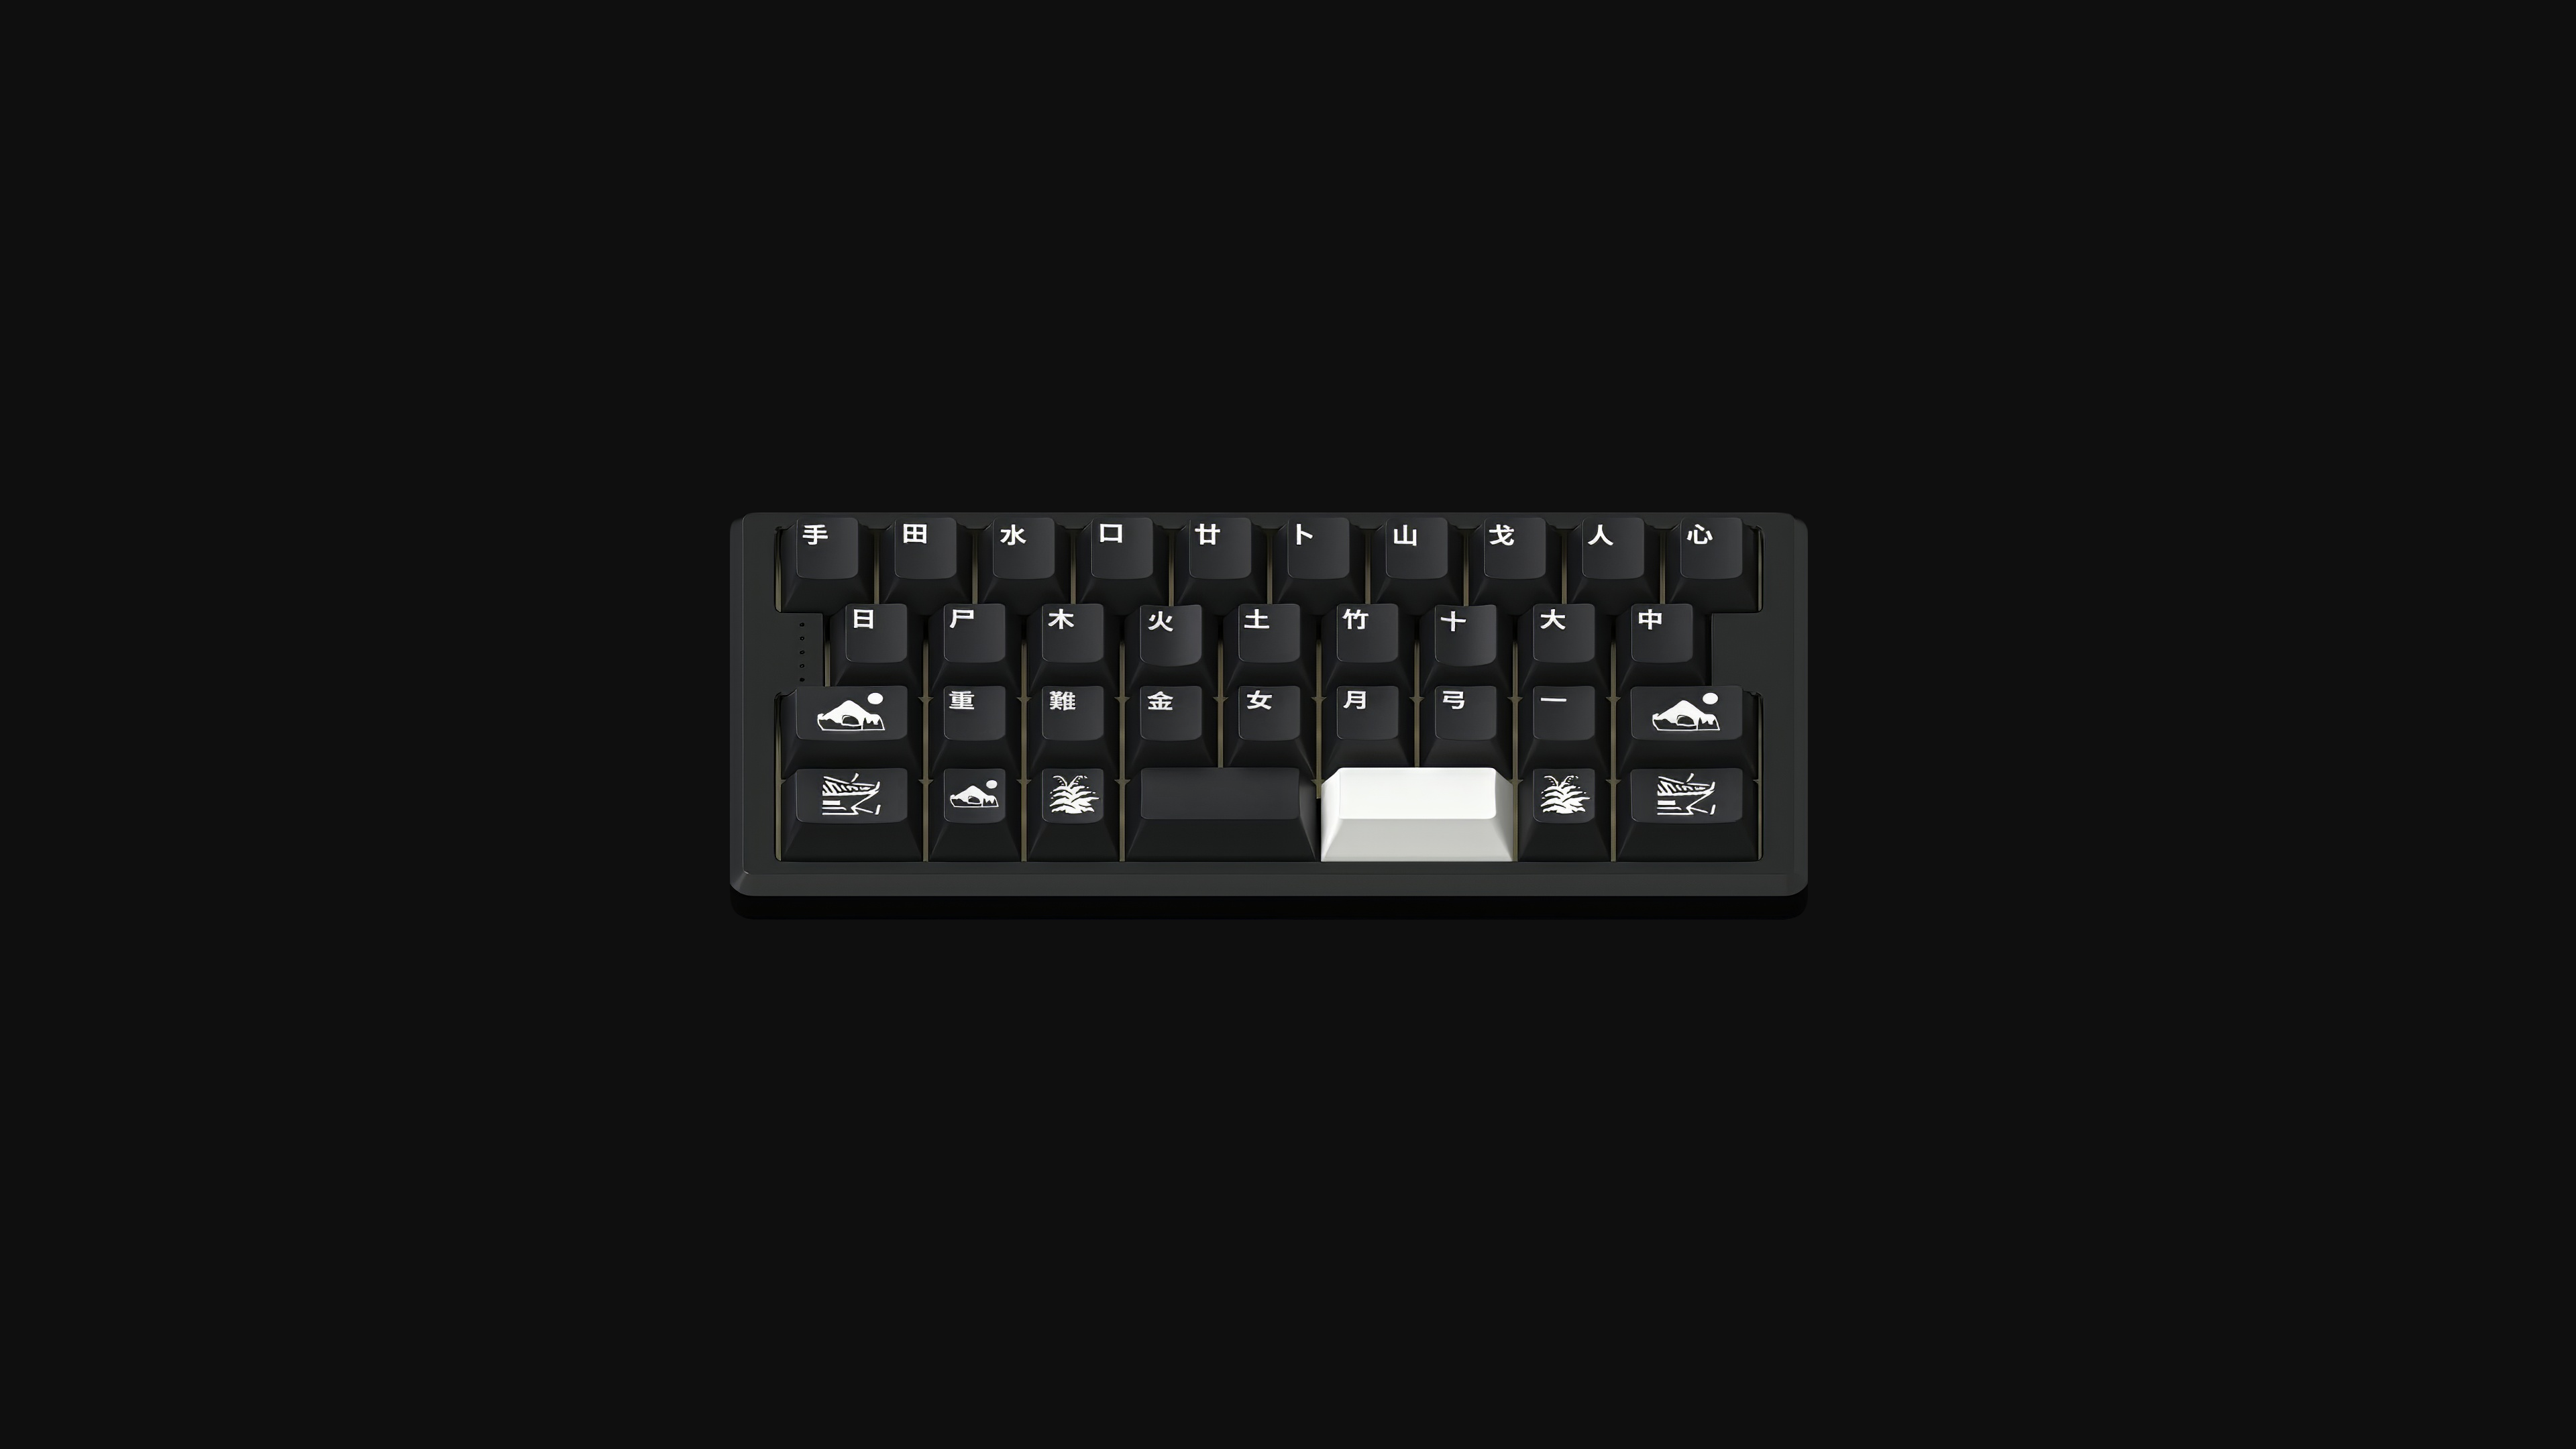 General 3840x2160 keyboards minimalism technology digital art simple background black background